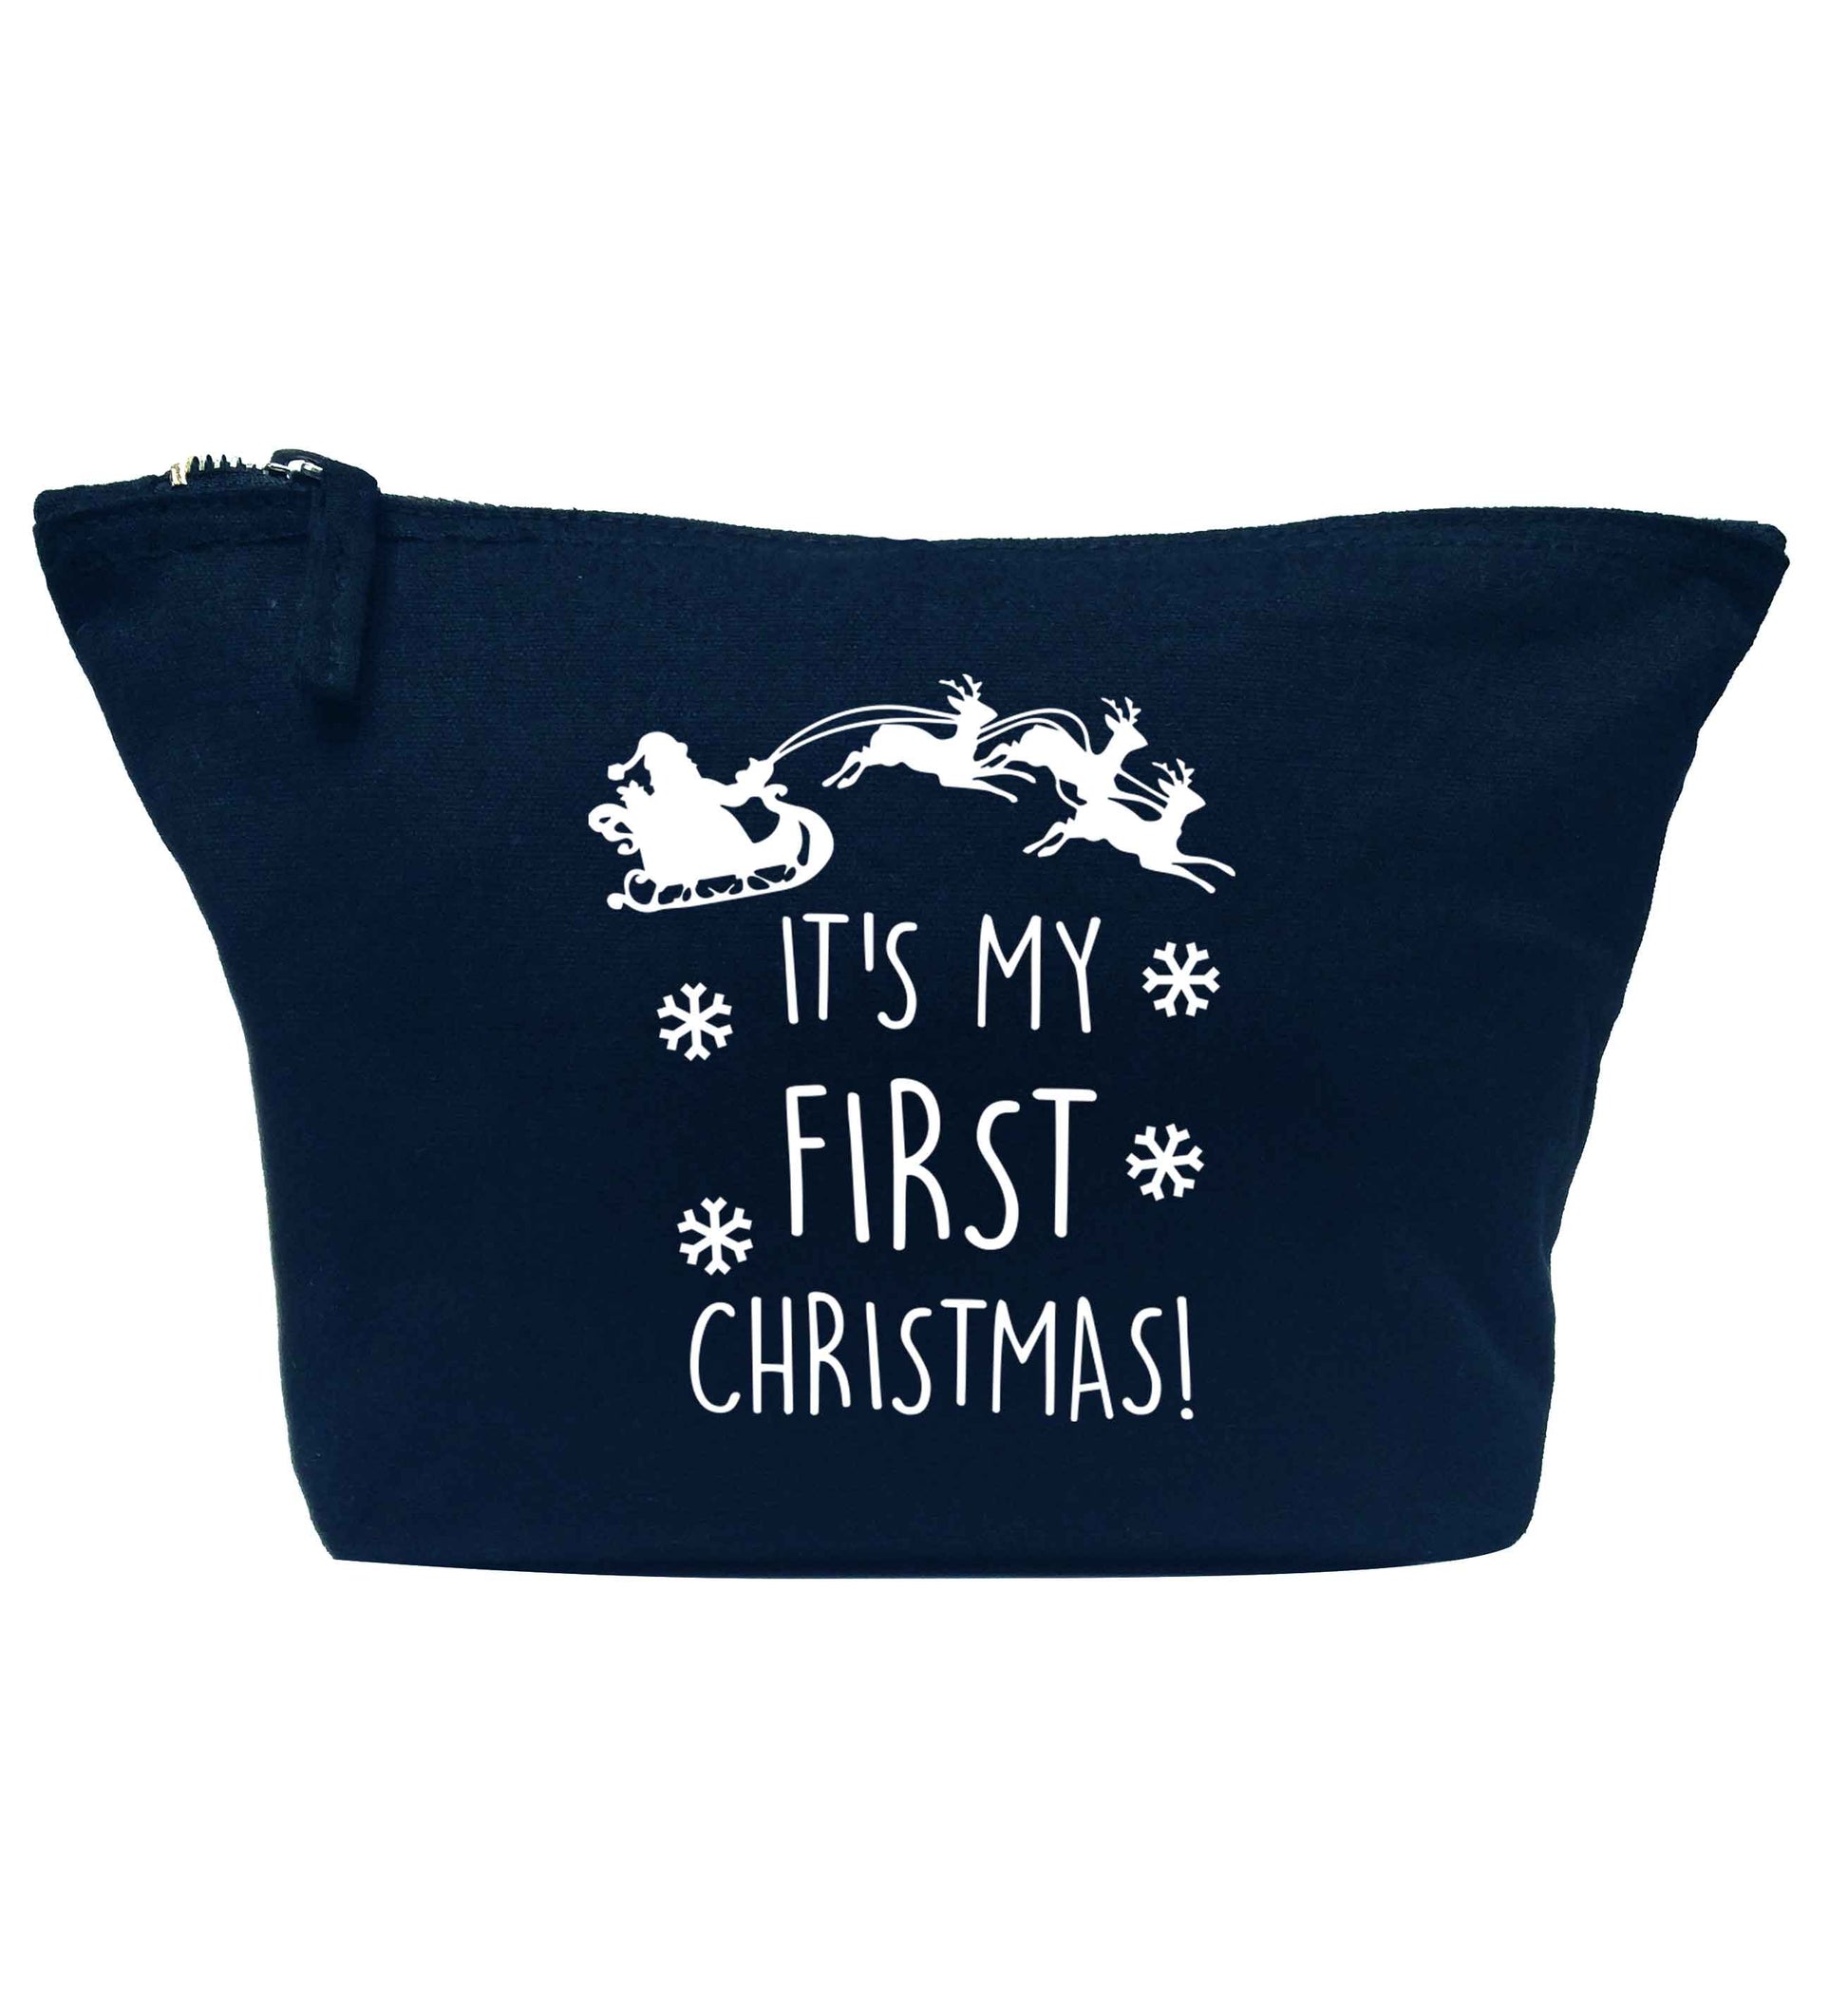 It's my first Christmas - Santa sleigh text navy makeup bag